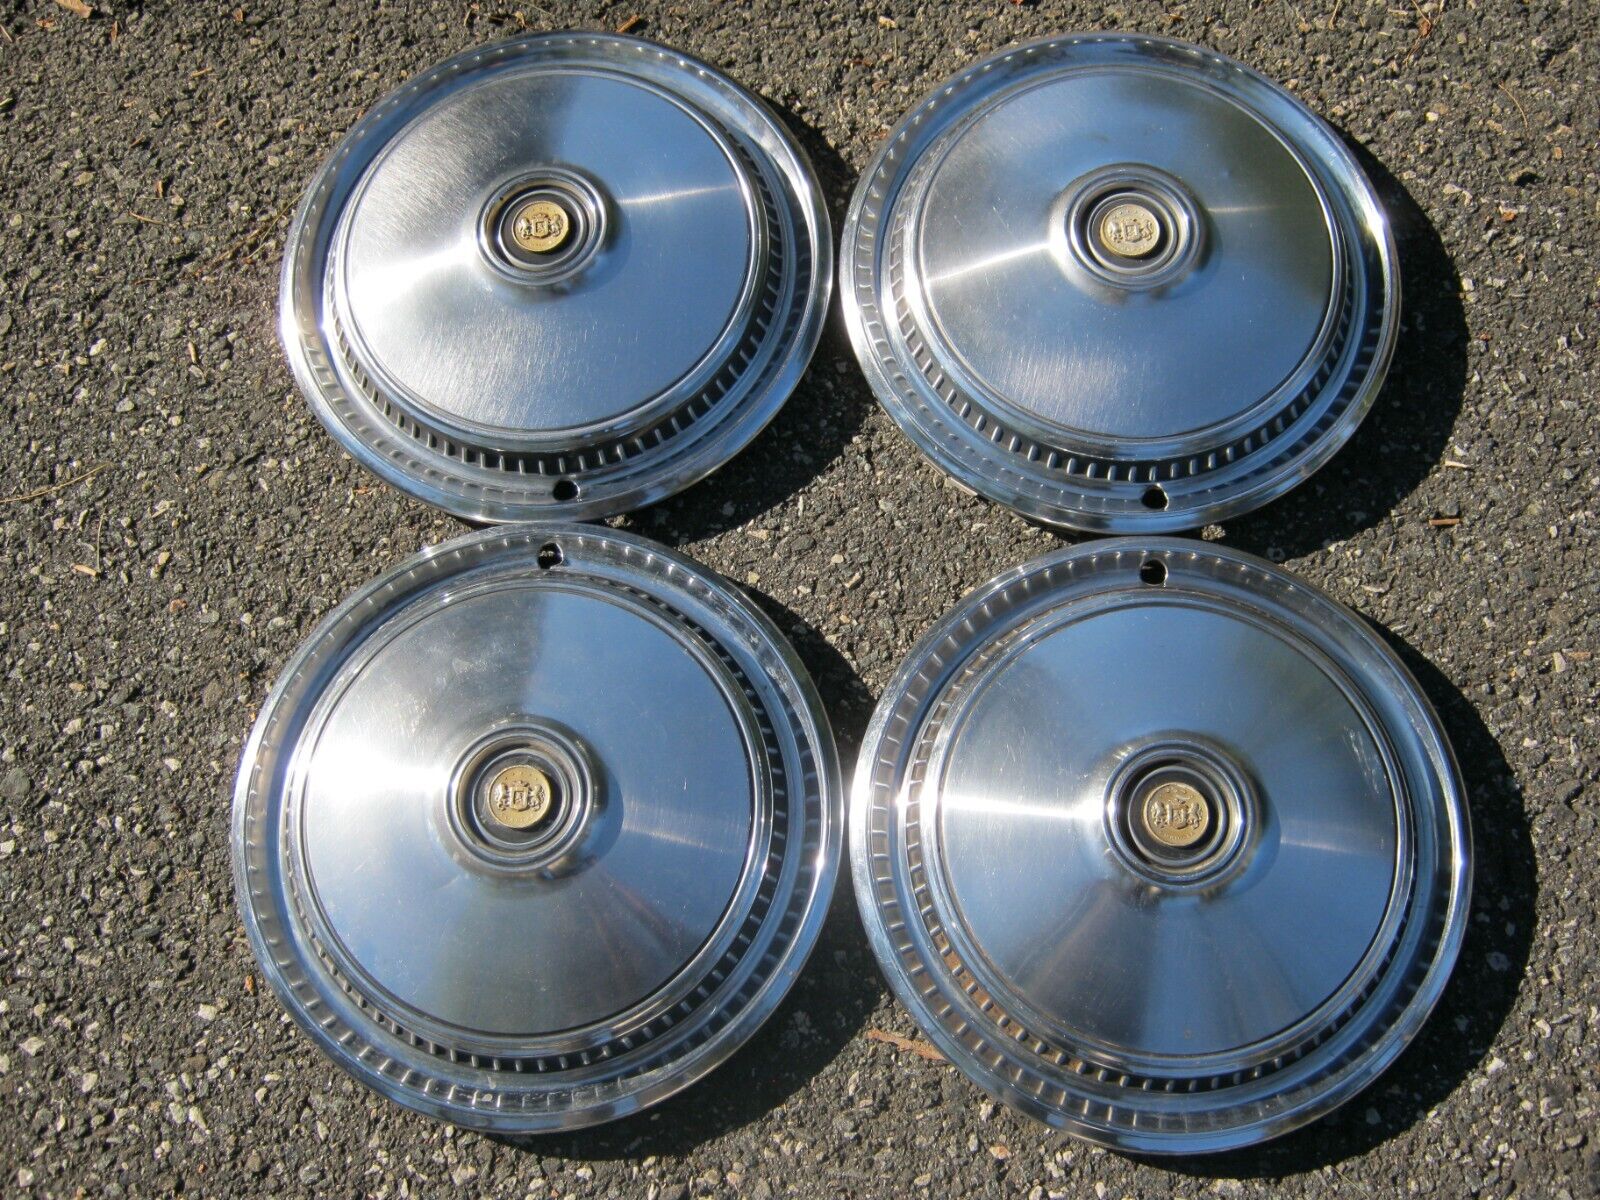 Genuine 1975 to 1979 Chrysler Cordoba 15 inch hubcaps wheel covers